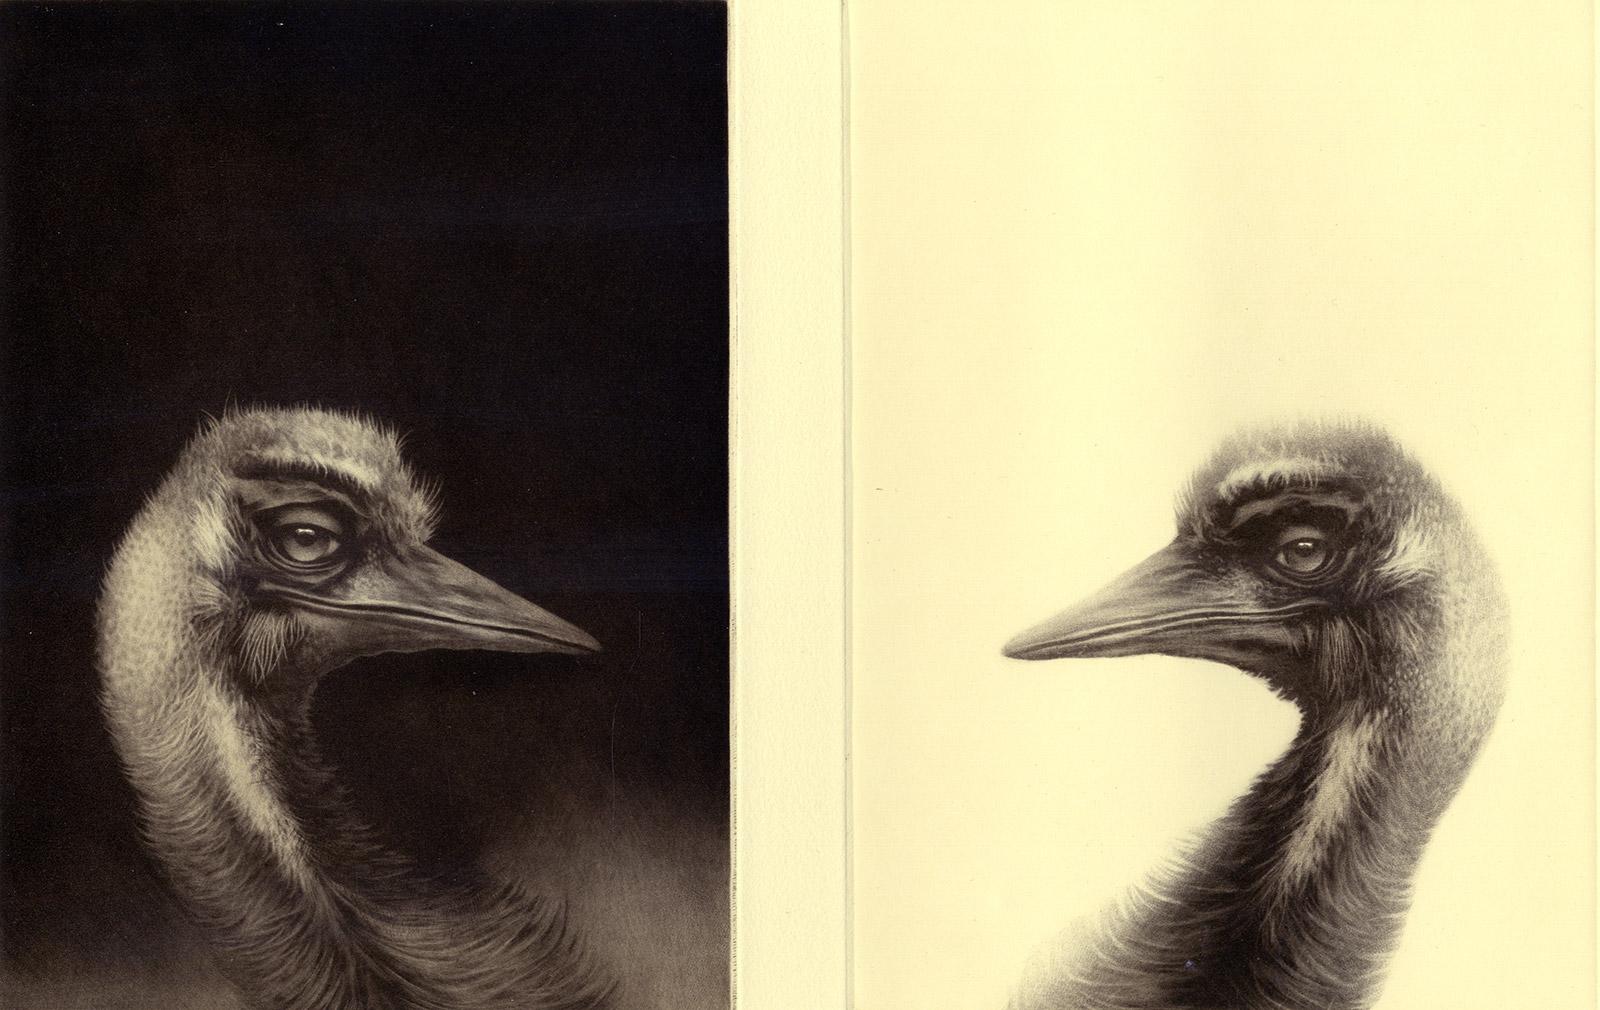 Erling Valtyrson Animal Print - Birdheads (two beaked birds facing off)